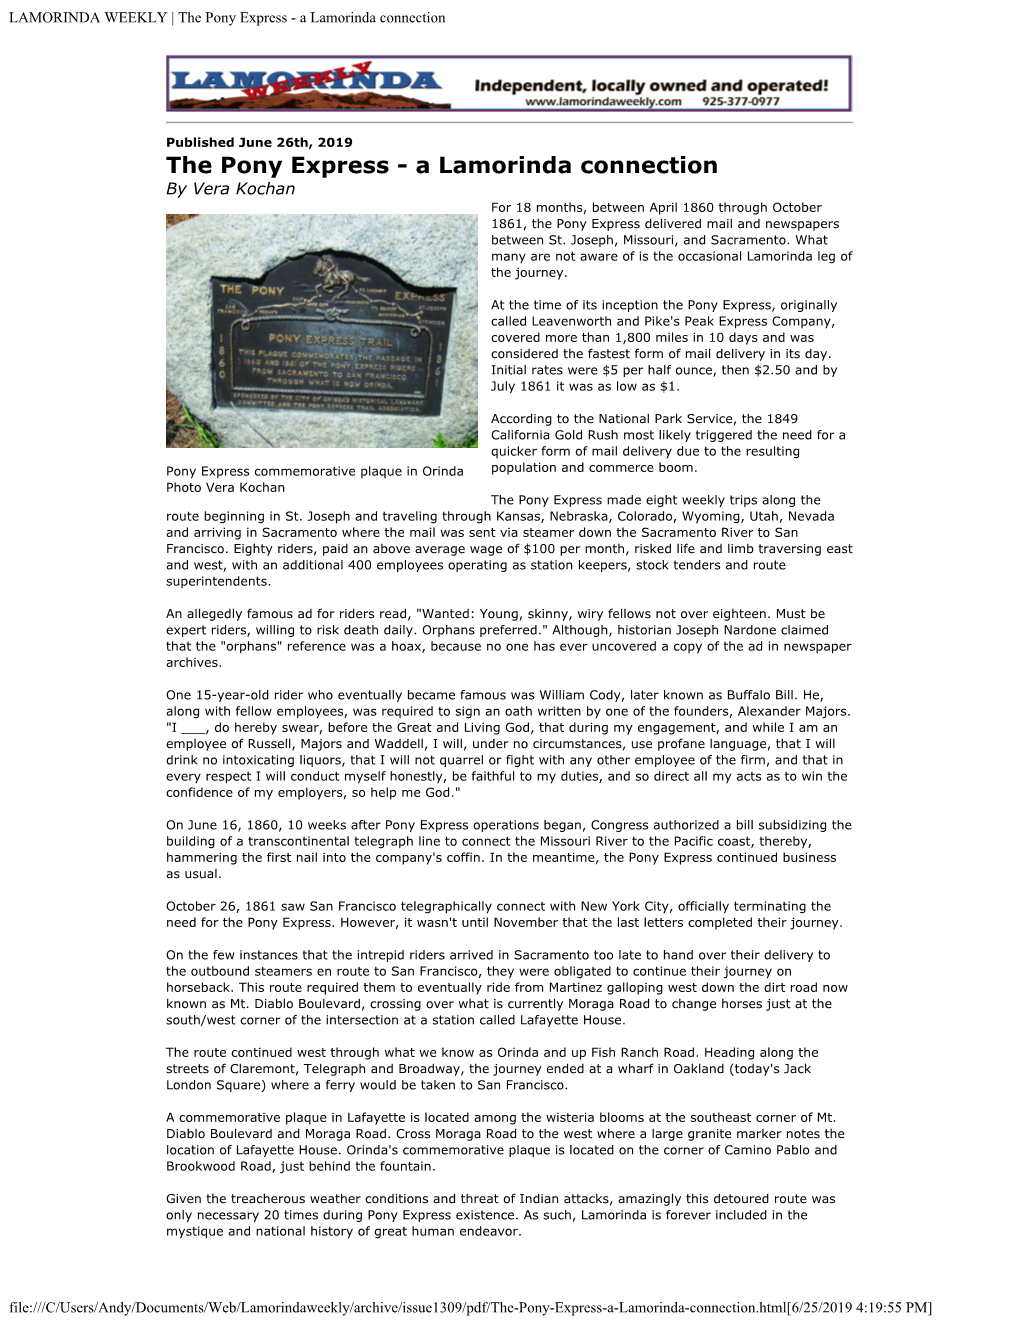 The Pony Express - a Lamorinda Connection